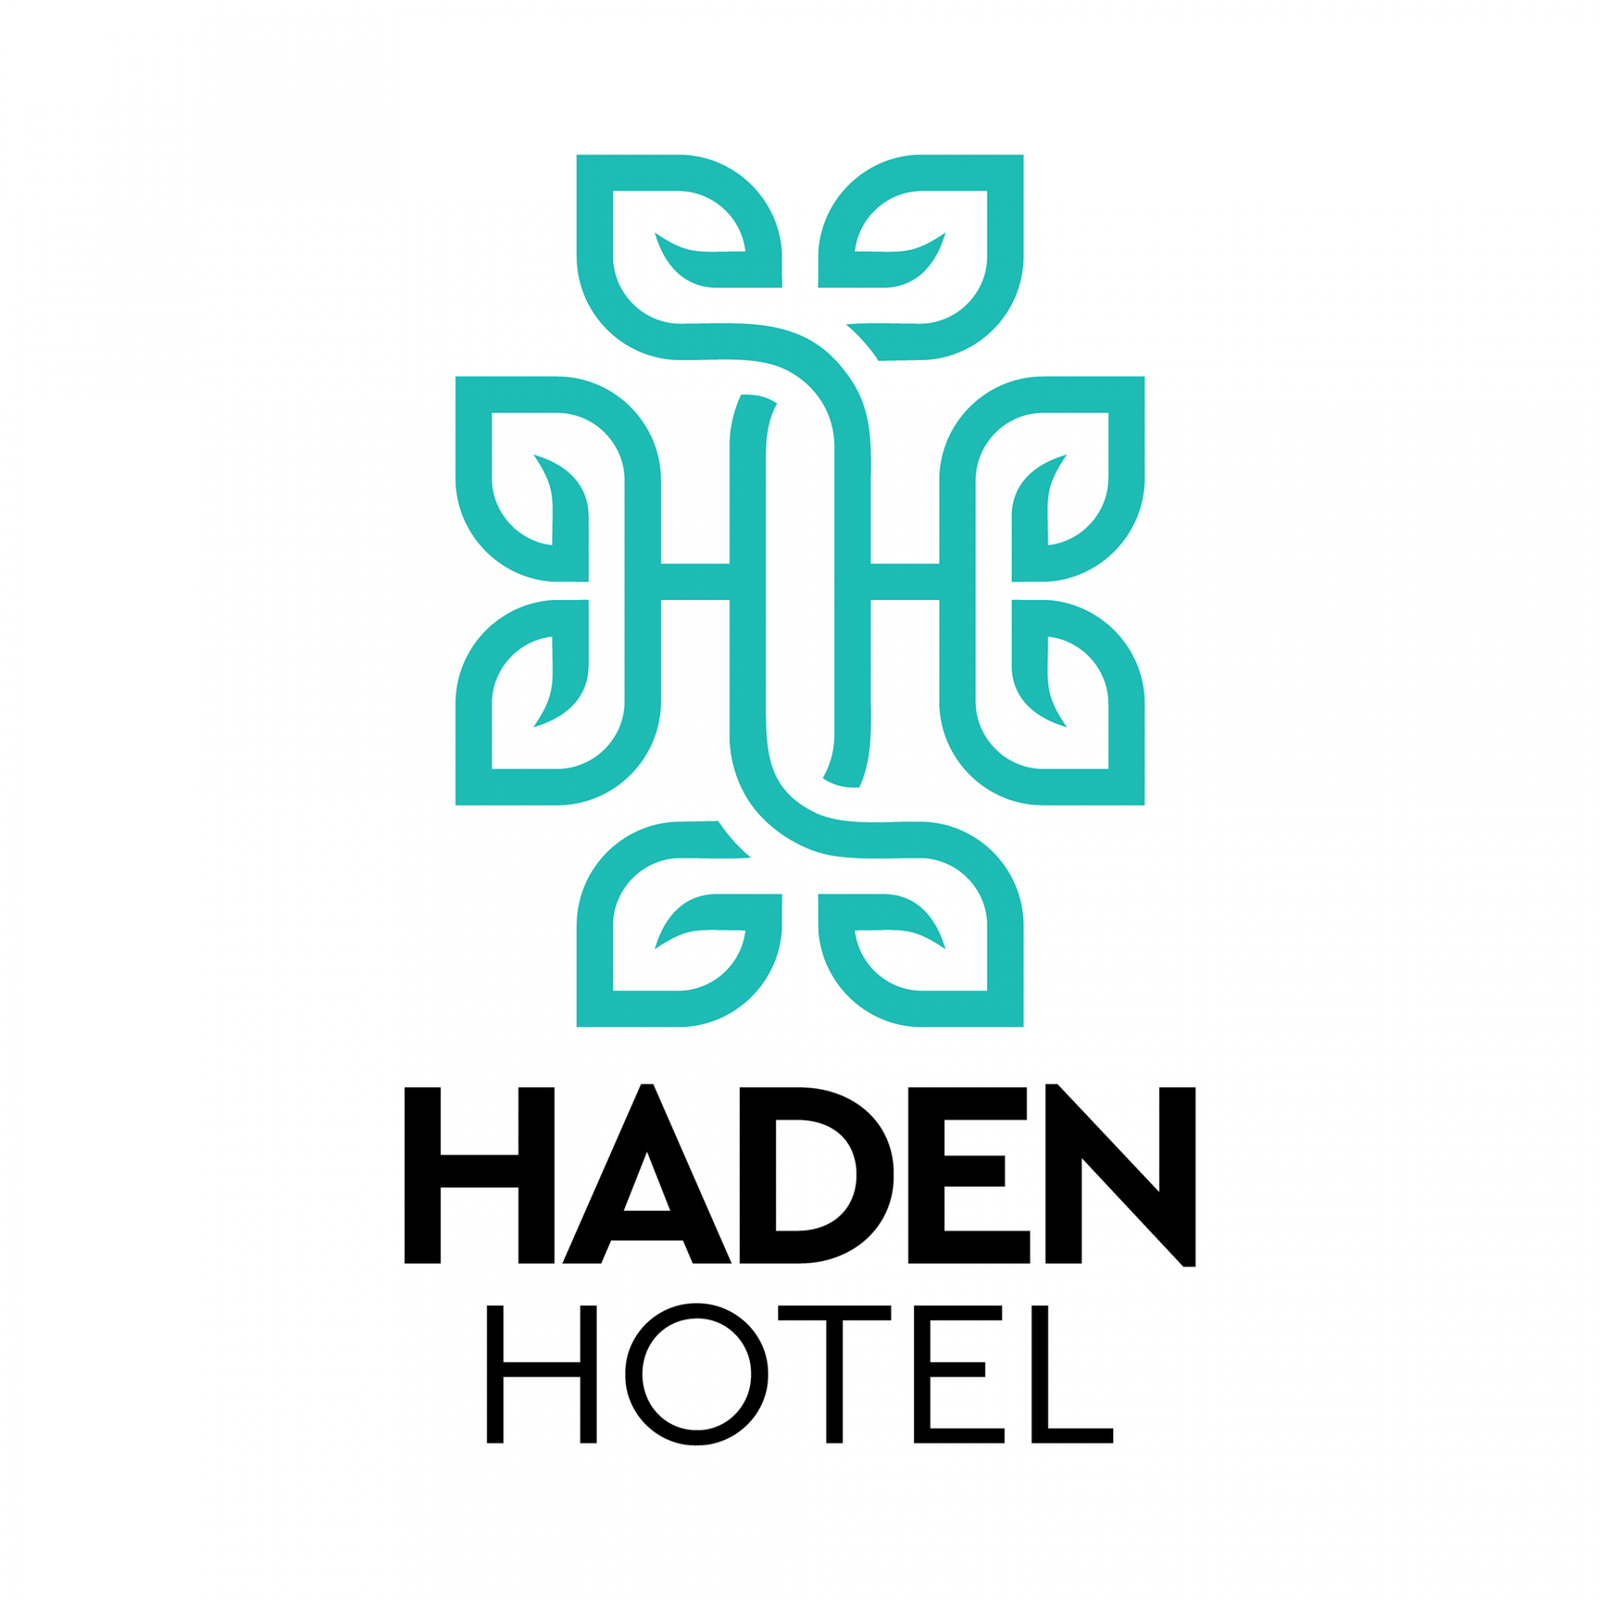 HADEN HOTEL